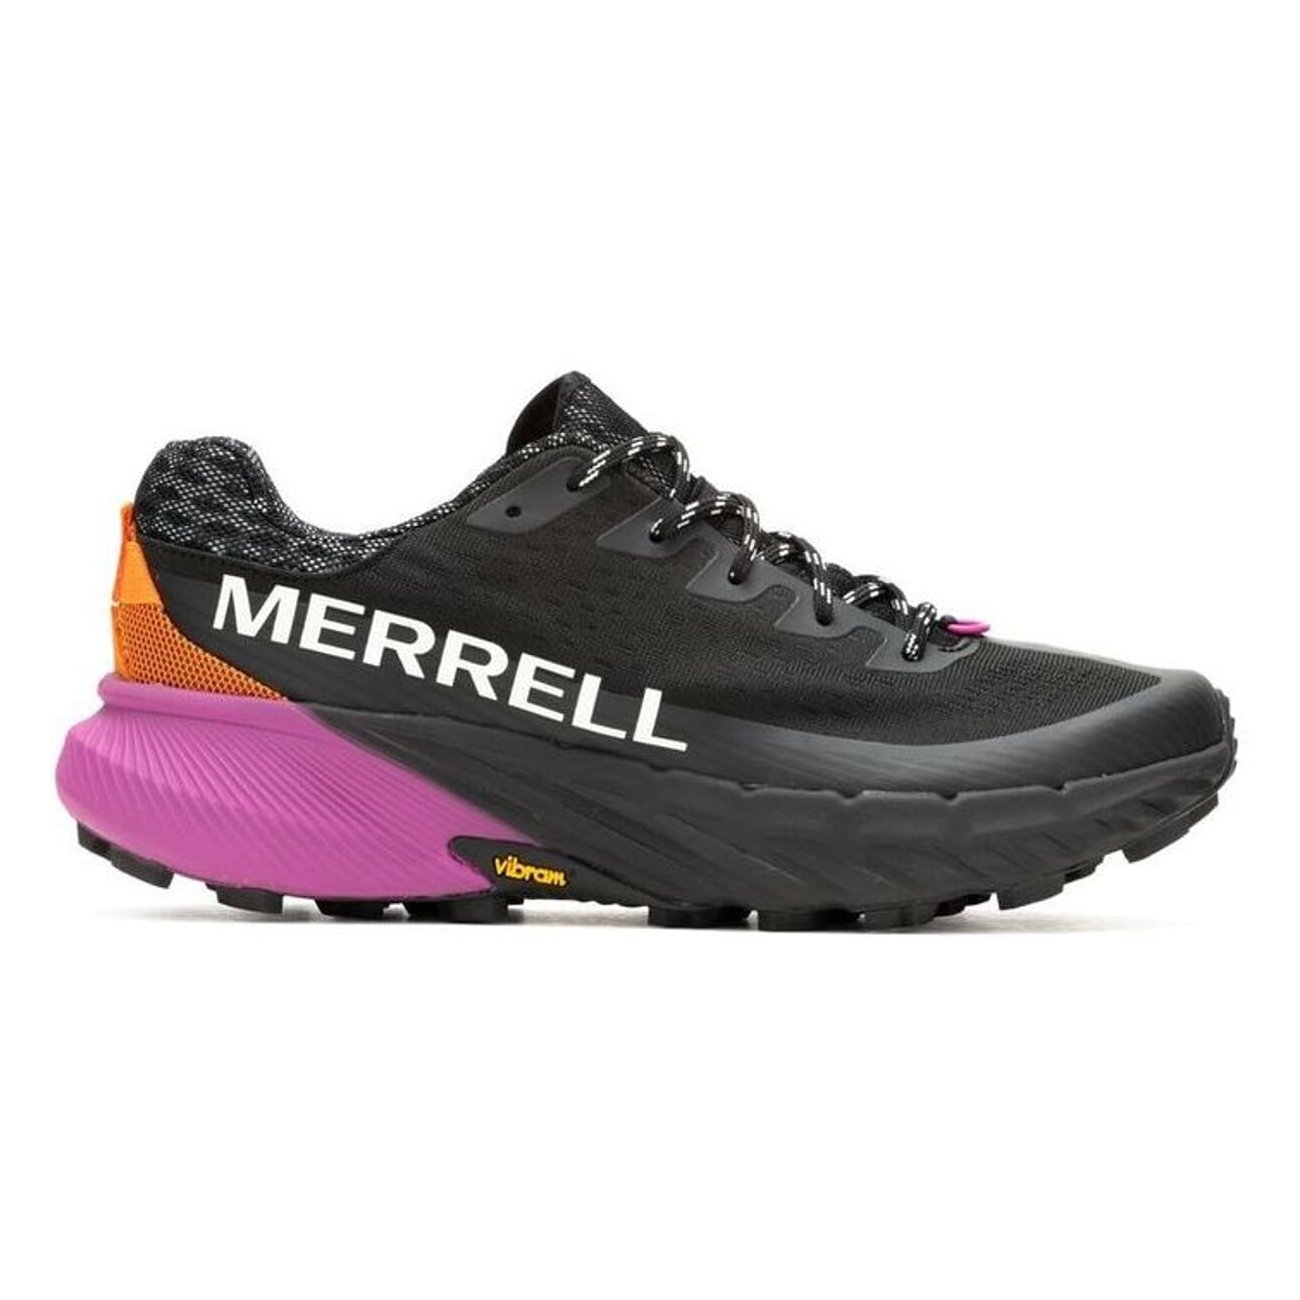 Merrell Agility Peak dámské běžecké boty černá